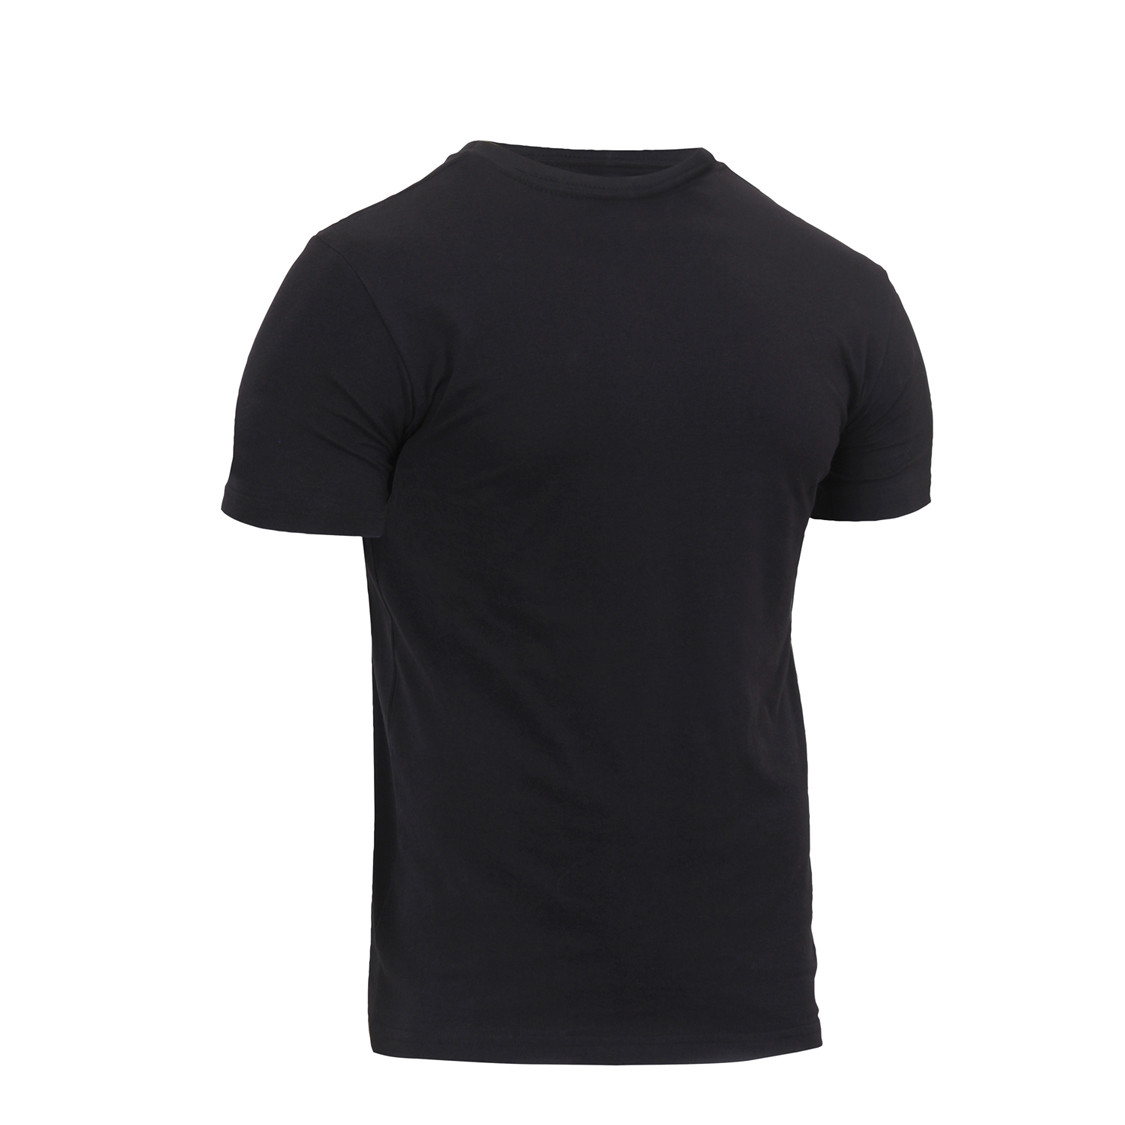 athletic fit black t shirt